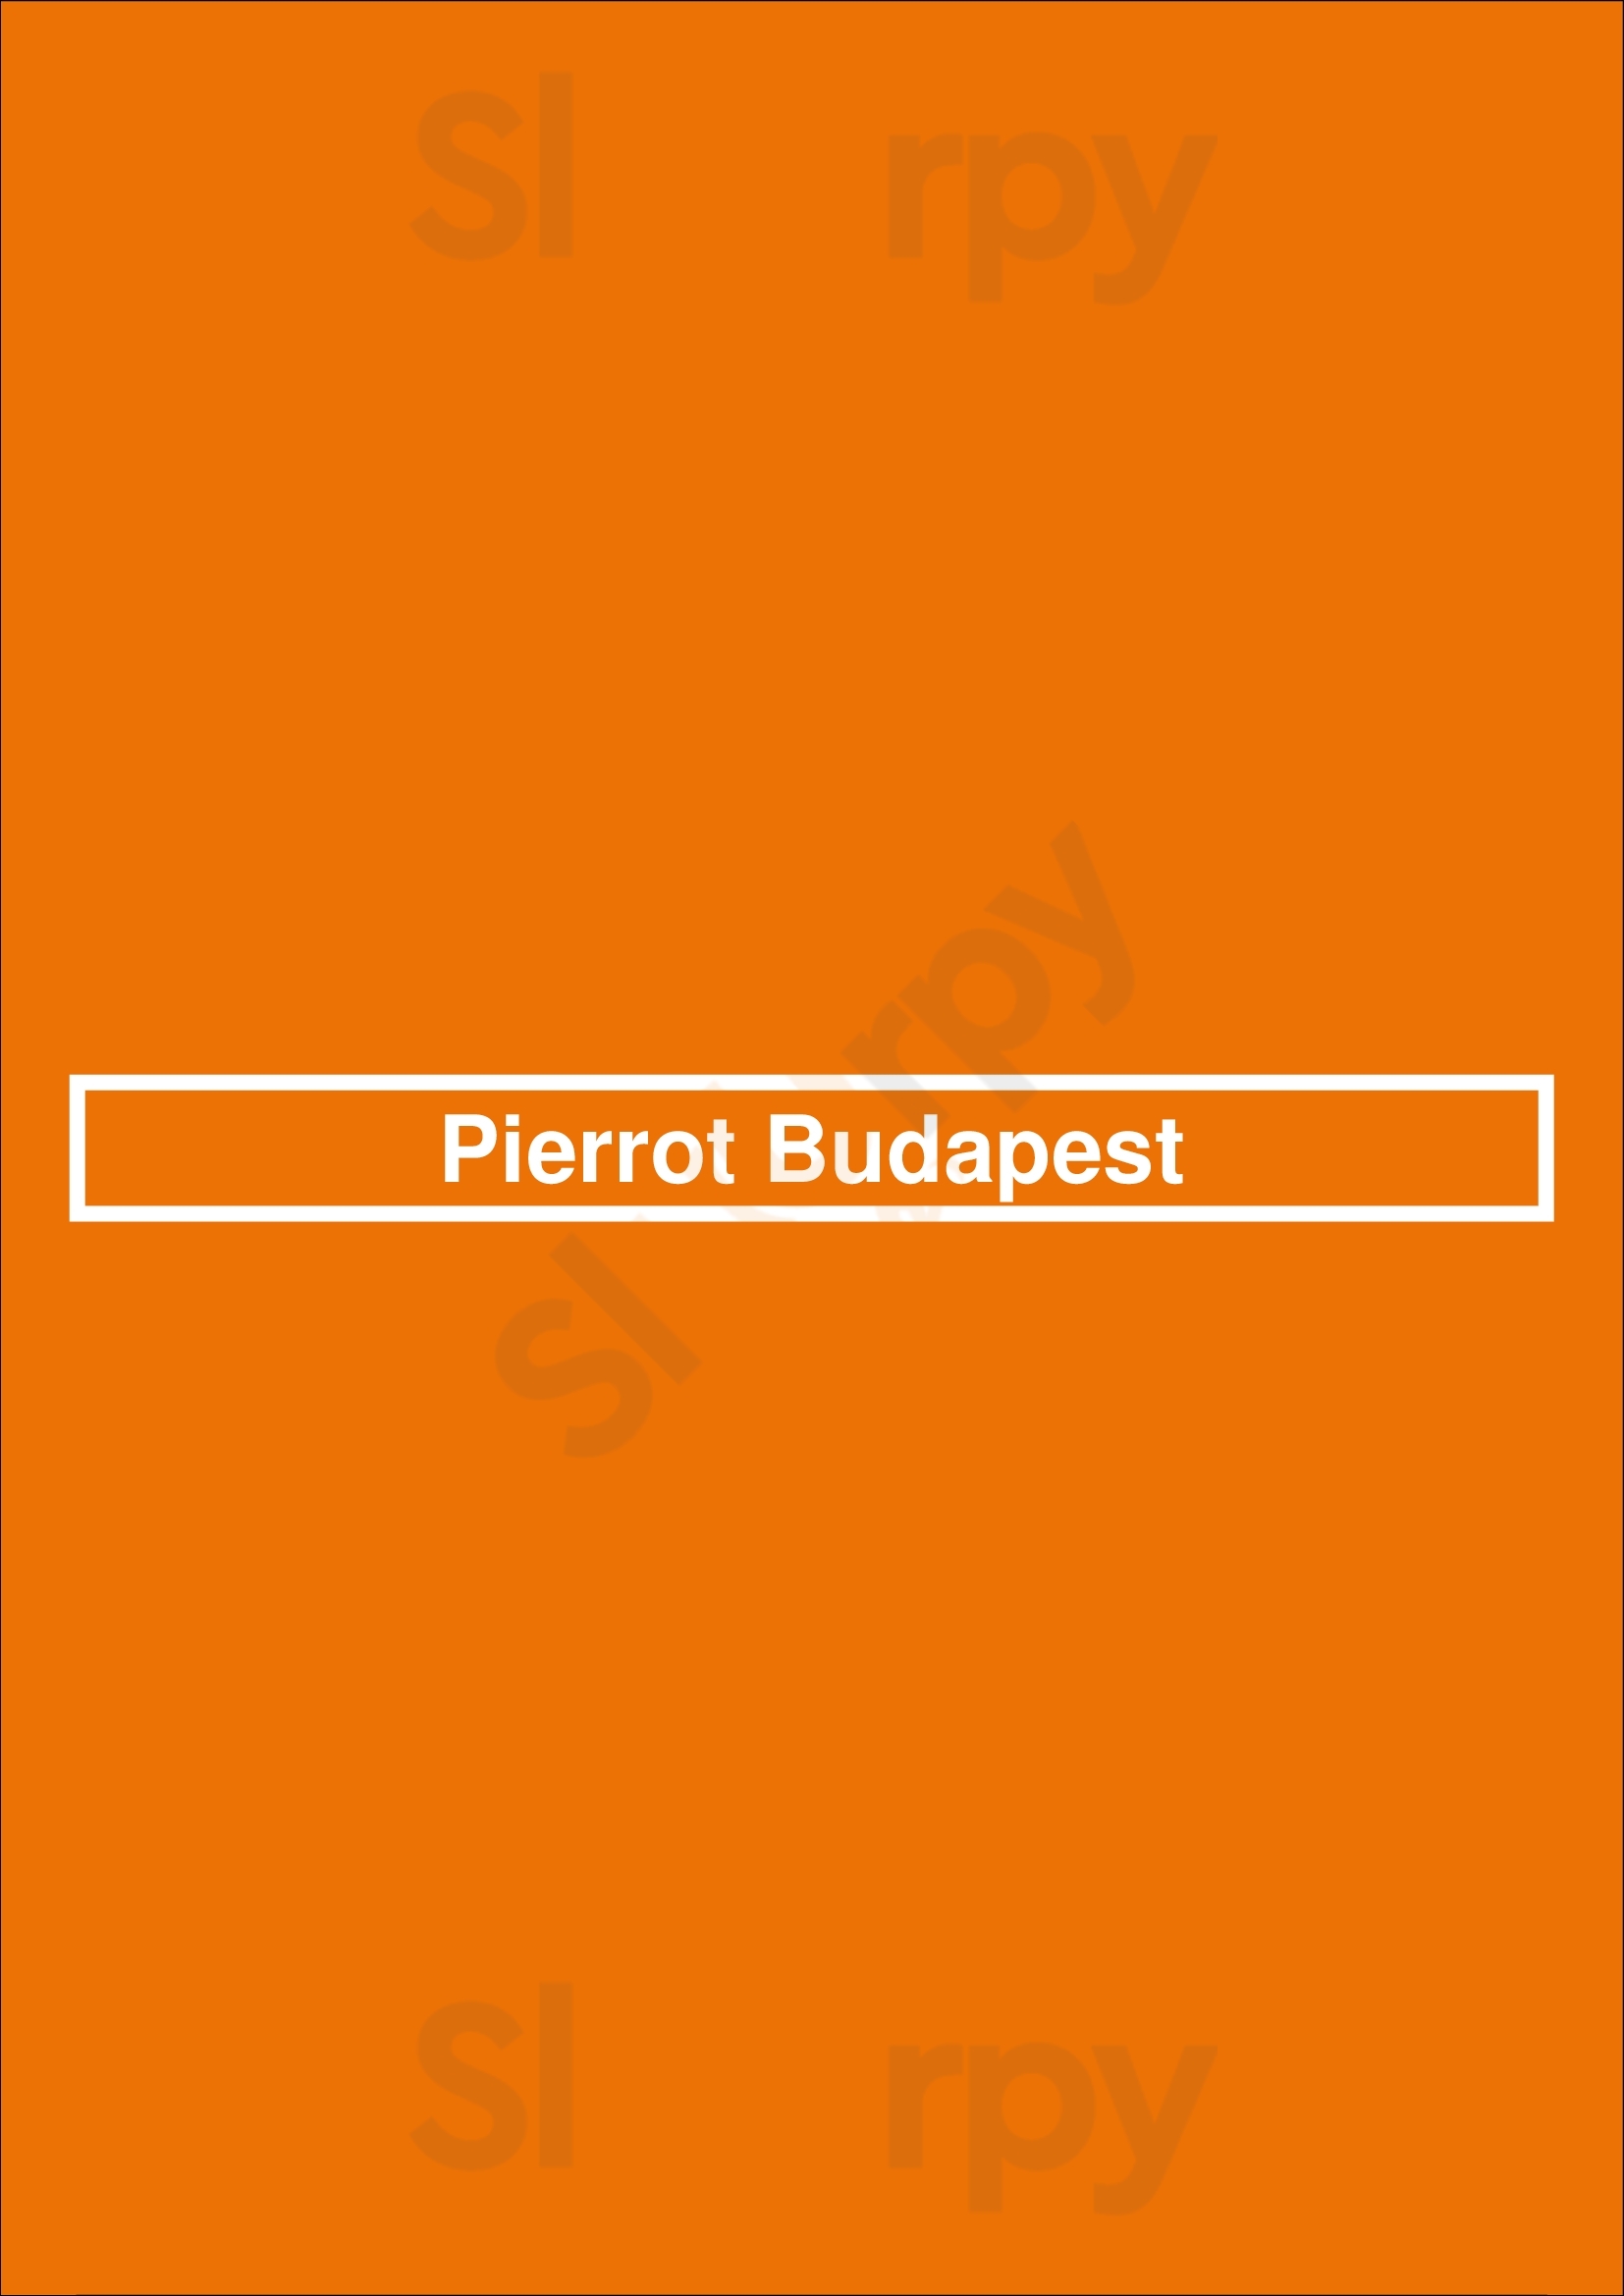 Pierrot Budapest Budapest Menu - 1